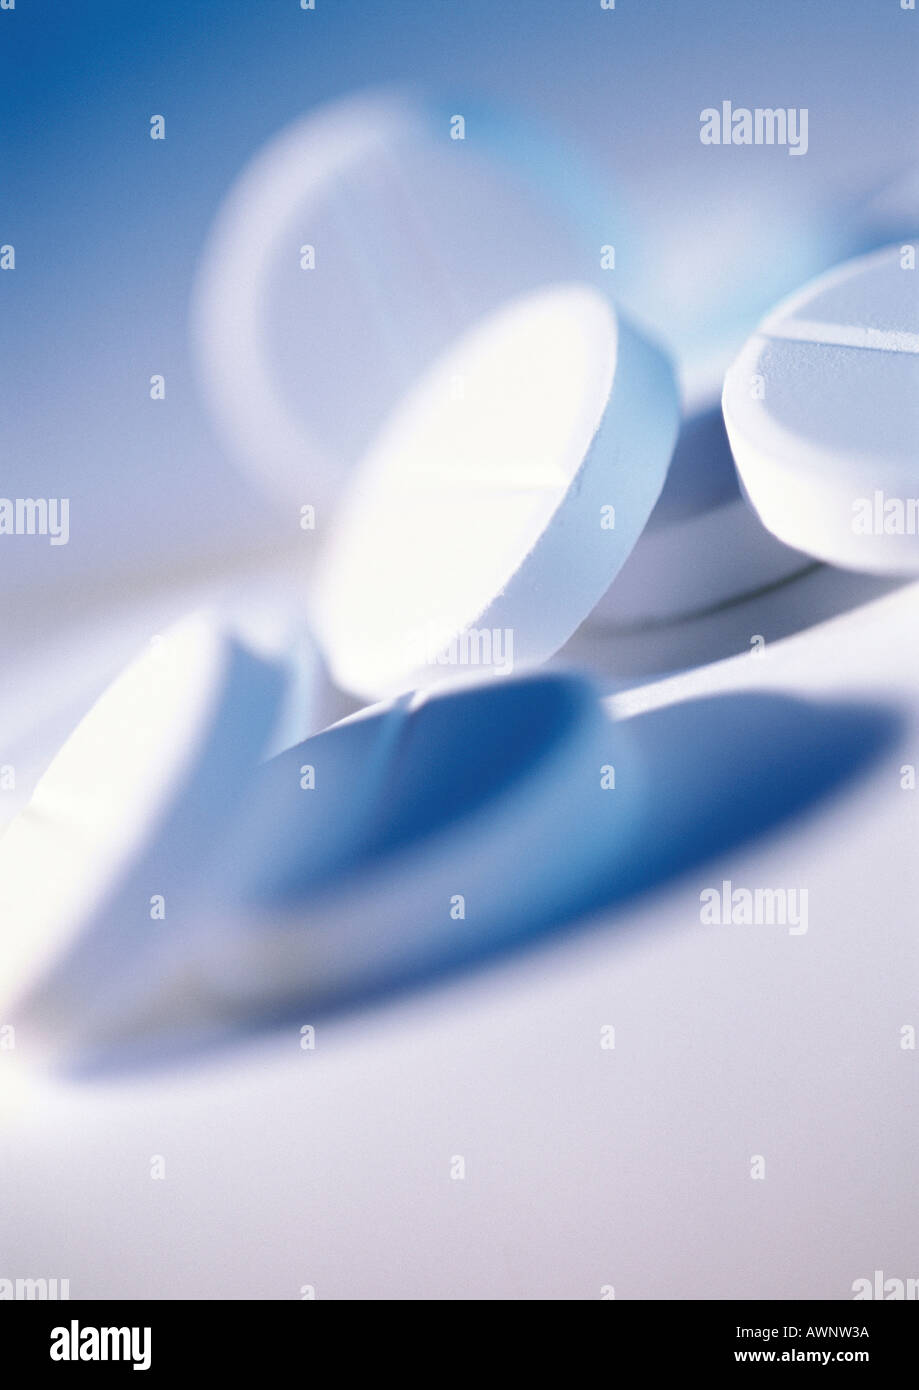 Medicine tablets, close-up Stock Photo